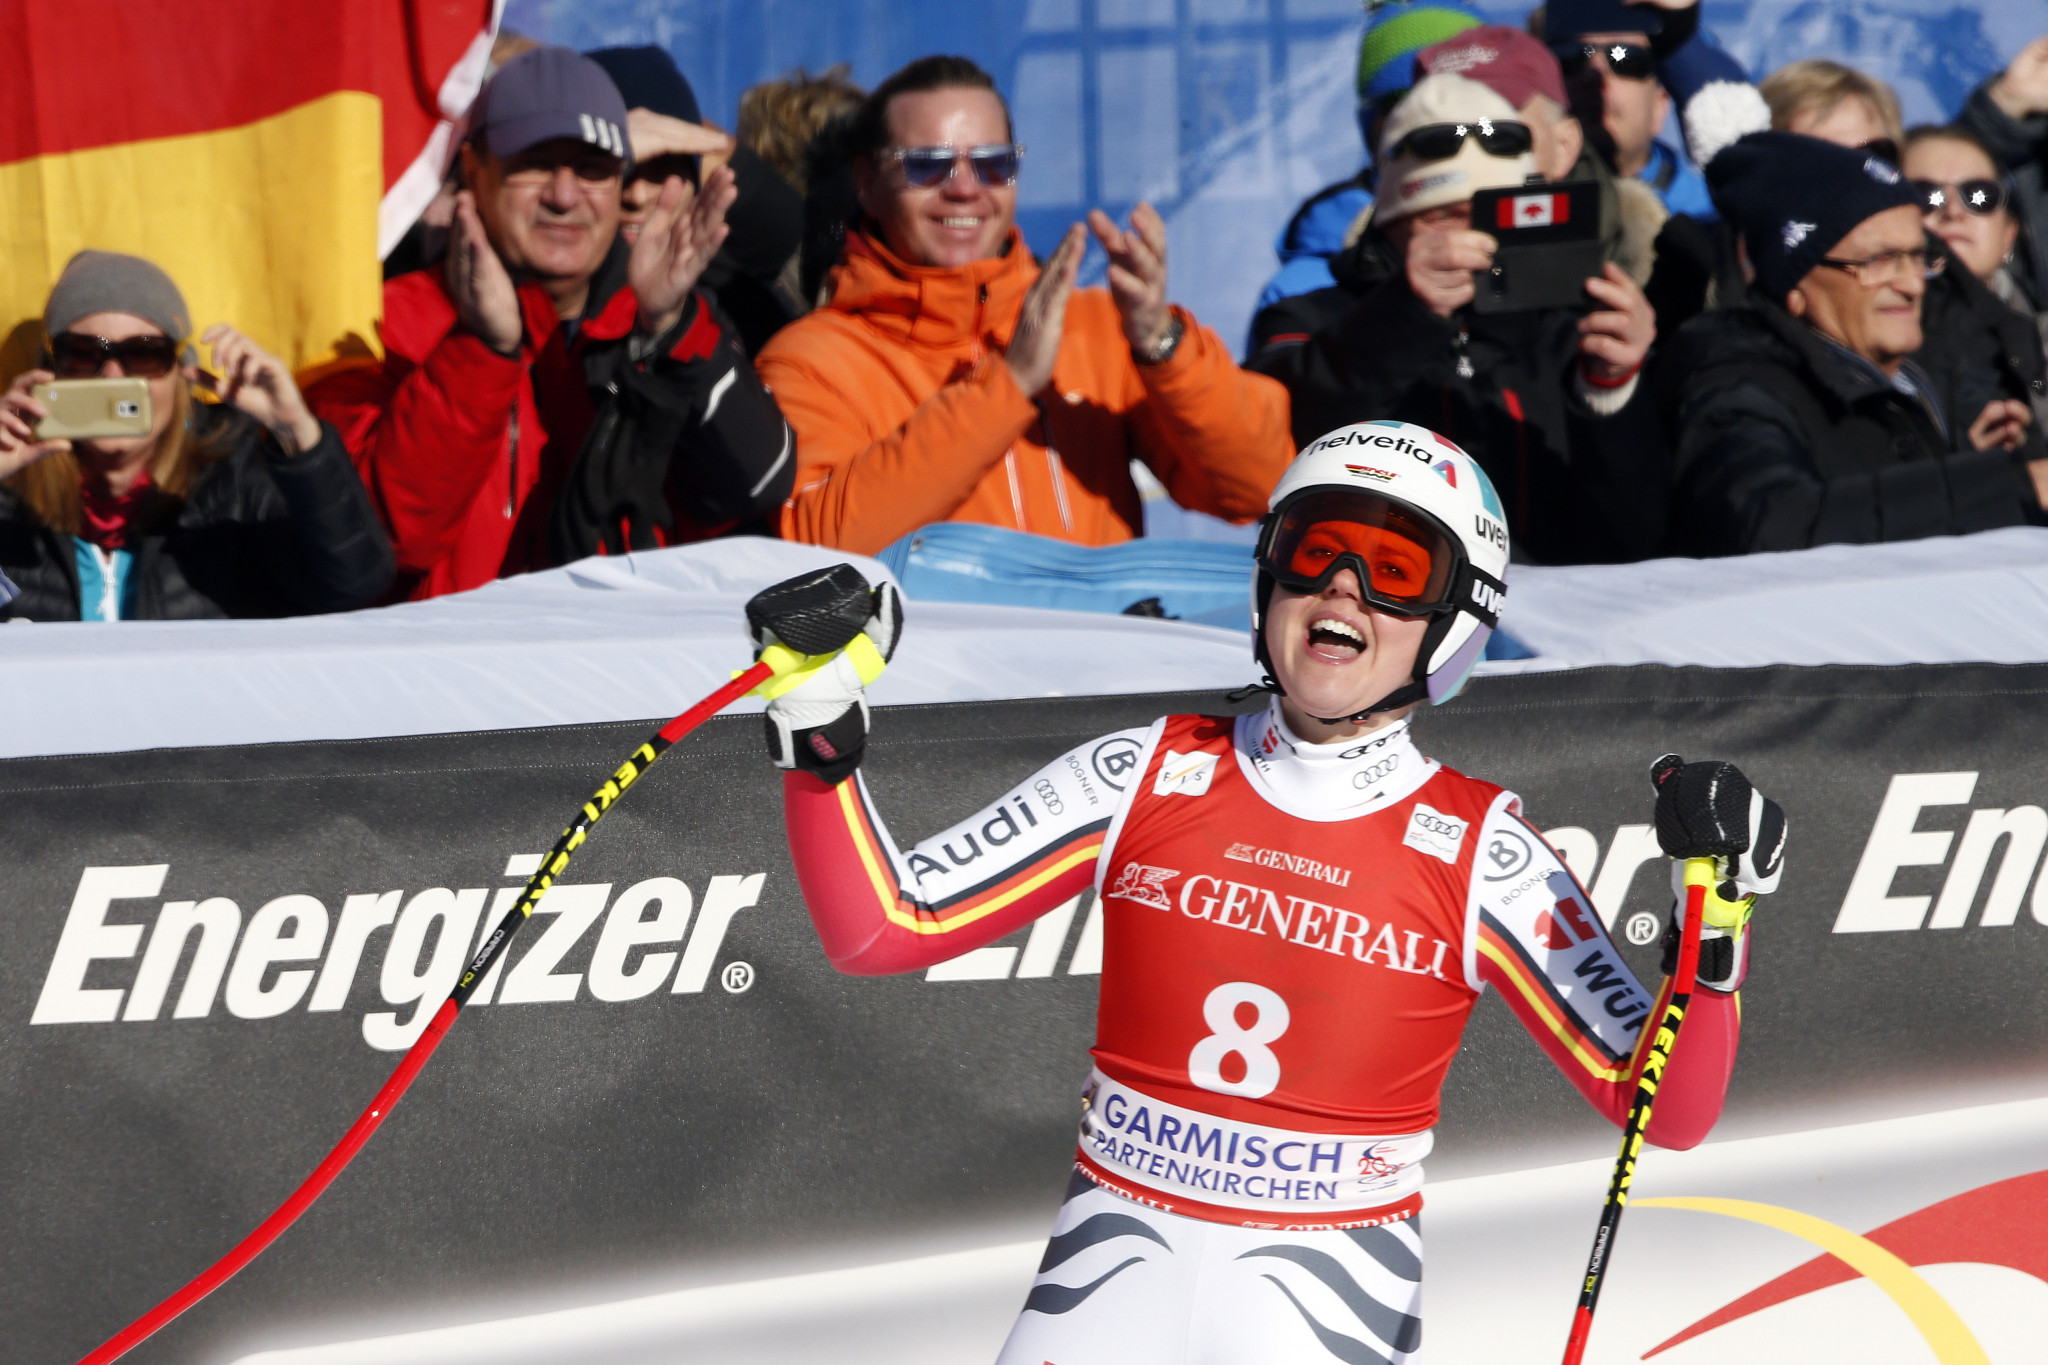 Rebensburg wins first FIS Alpine Ski World Cup downhill event on home turf 